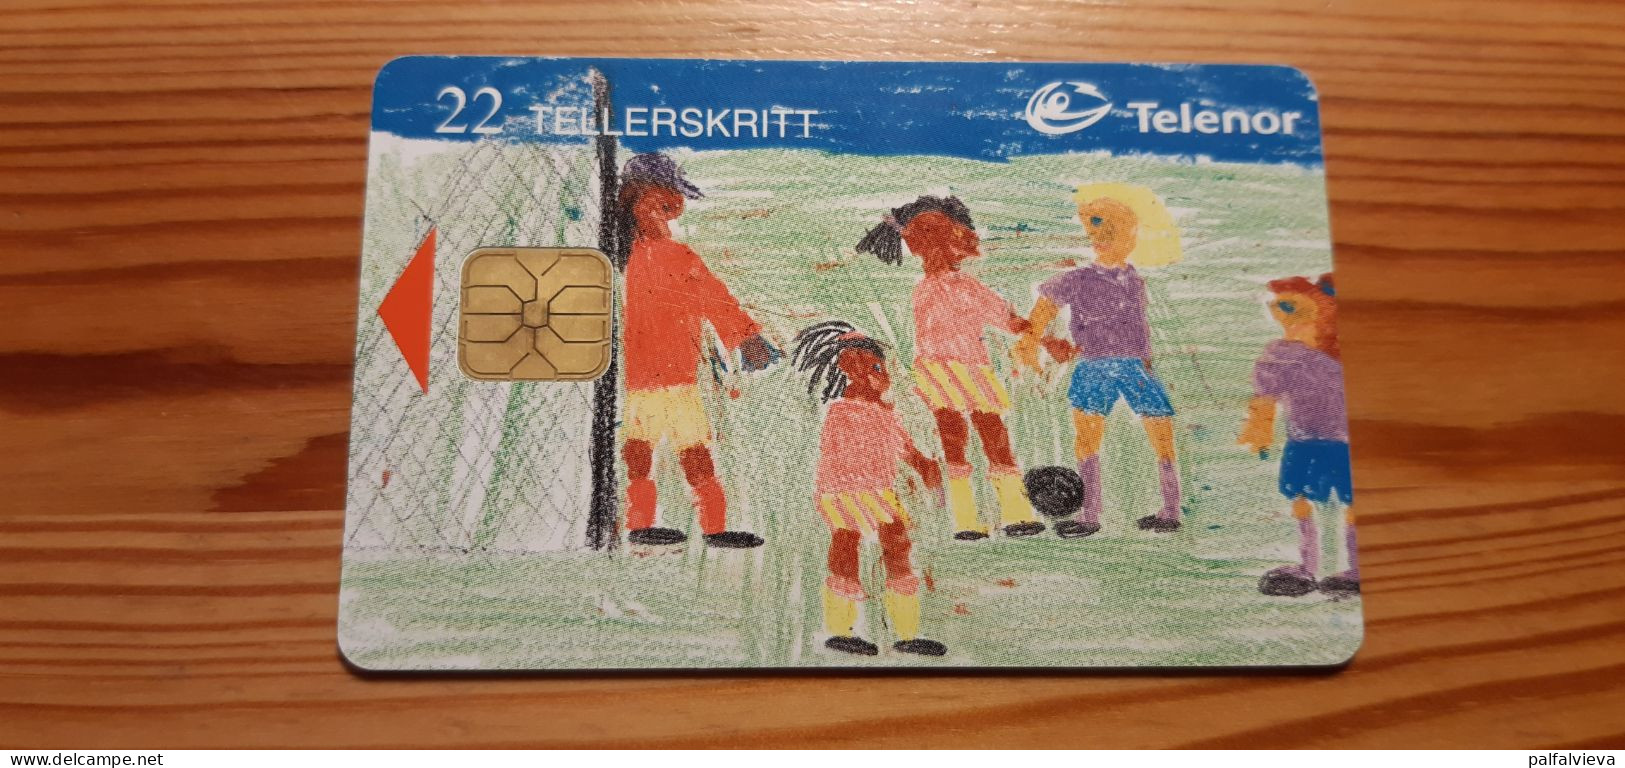 Phonecard Norway N-147 6/99 - Norway Cup, Football - Norwegen